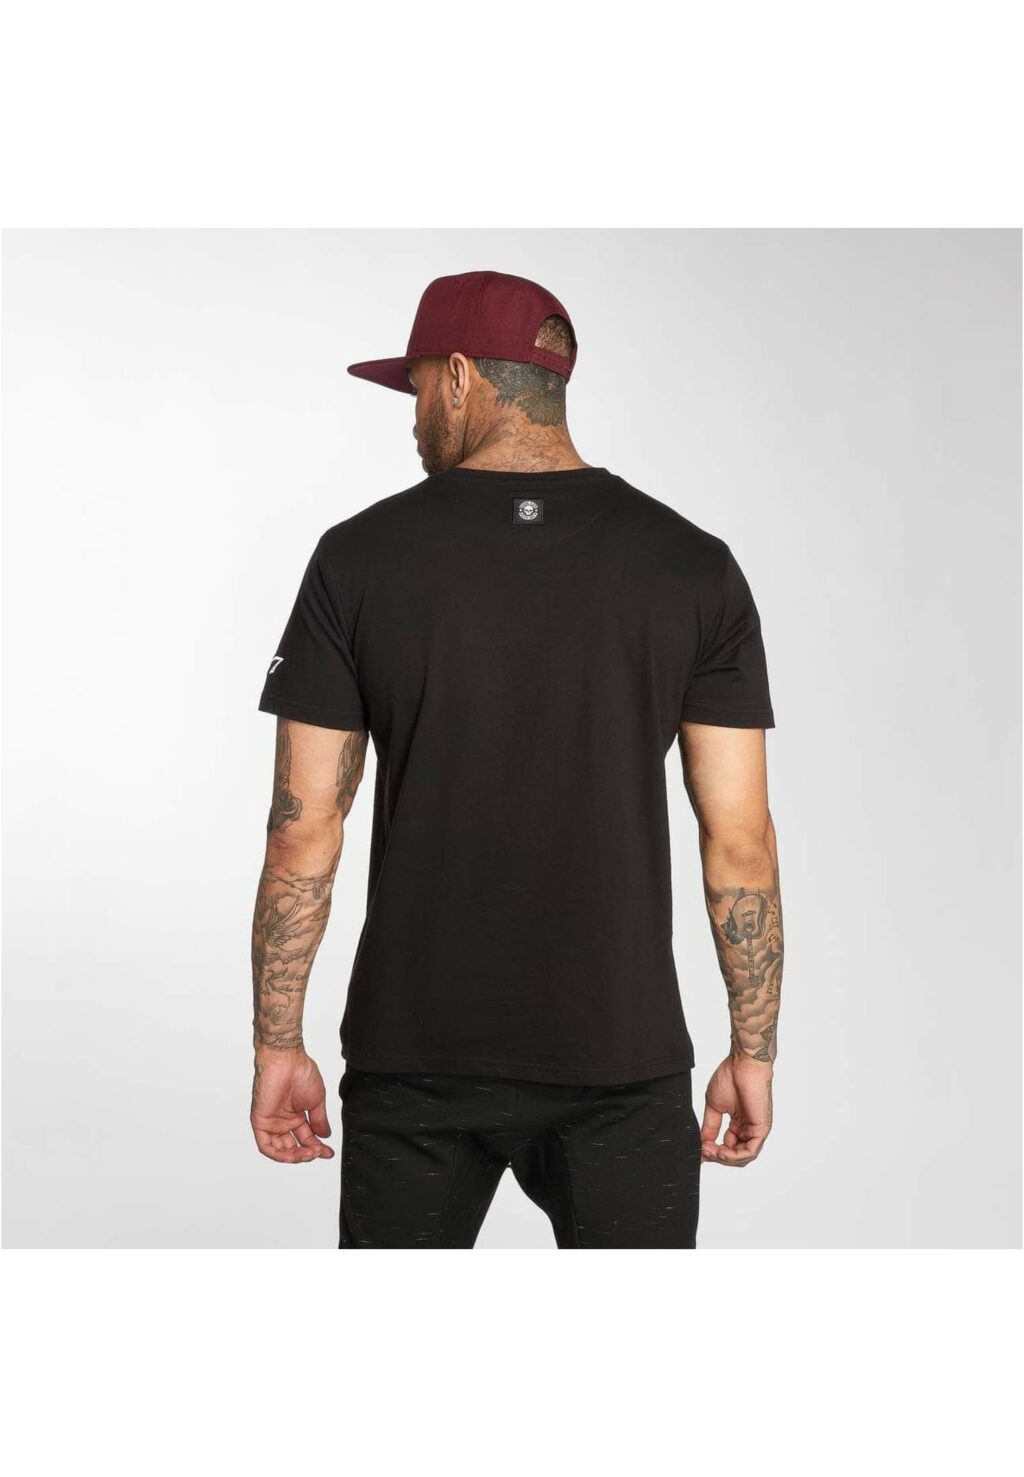 Thug Life B.Skull T-Shirt black TLTS161